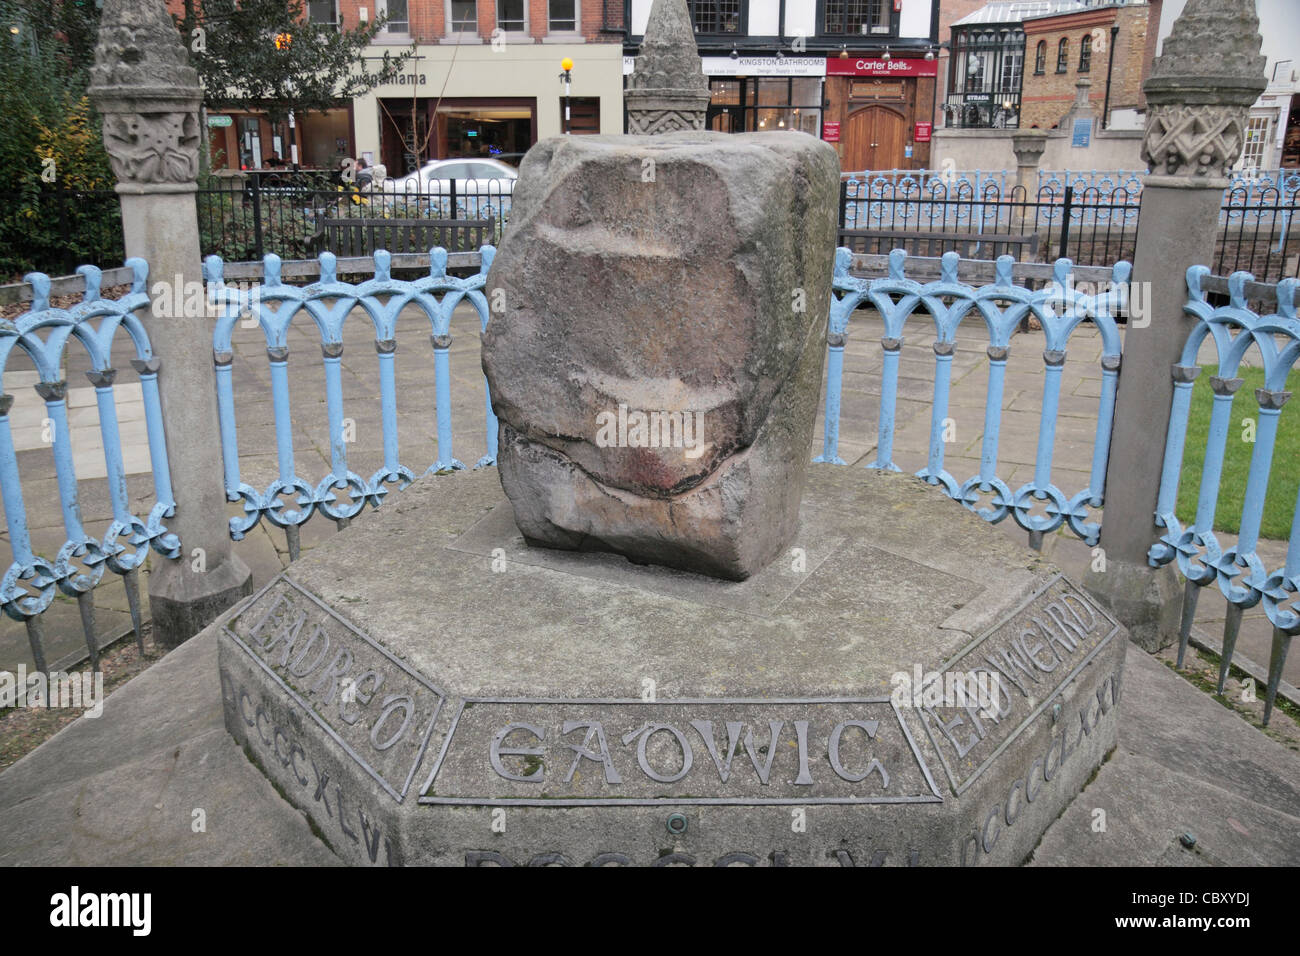 The Coronation Stone in Kingston Upon Thames, Surrey, UK. Stock Photo